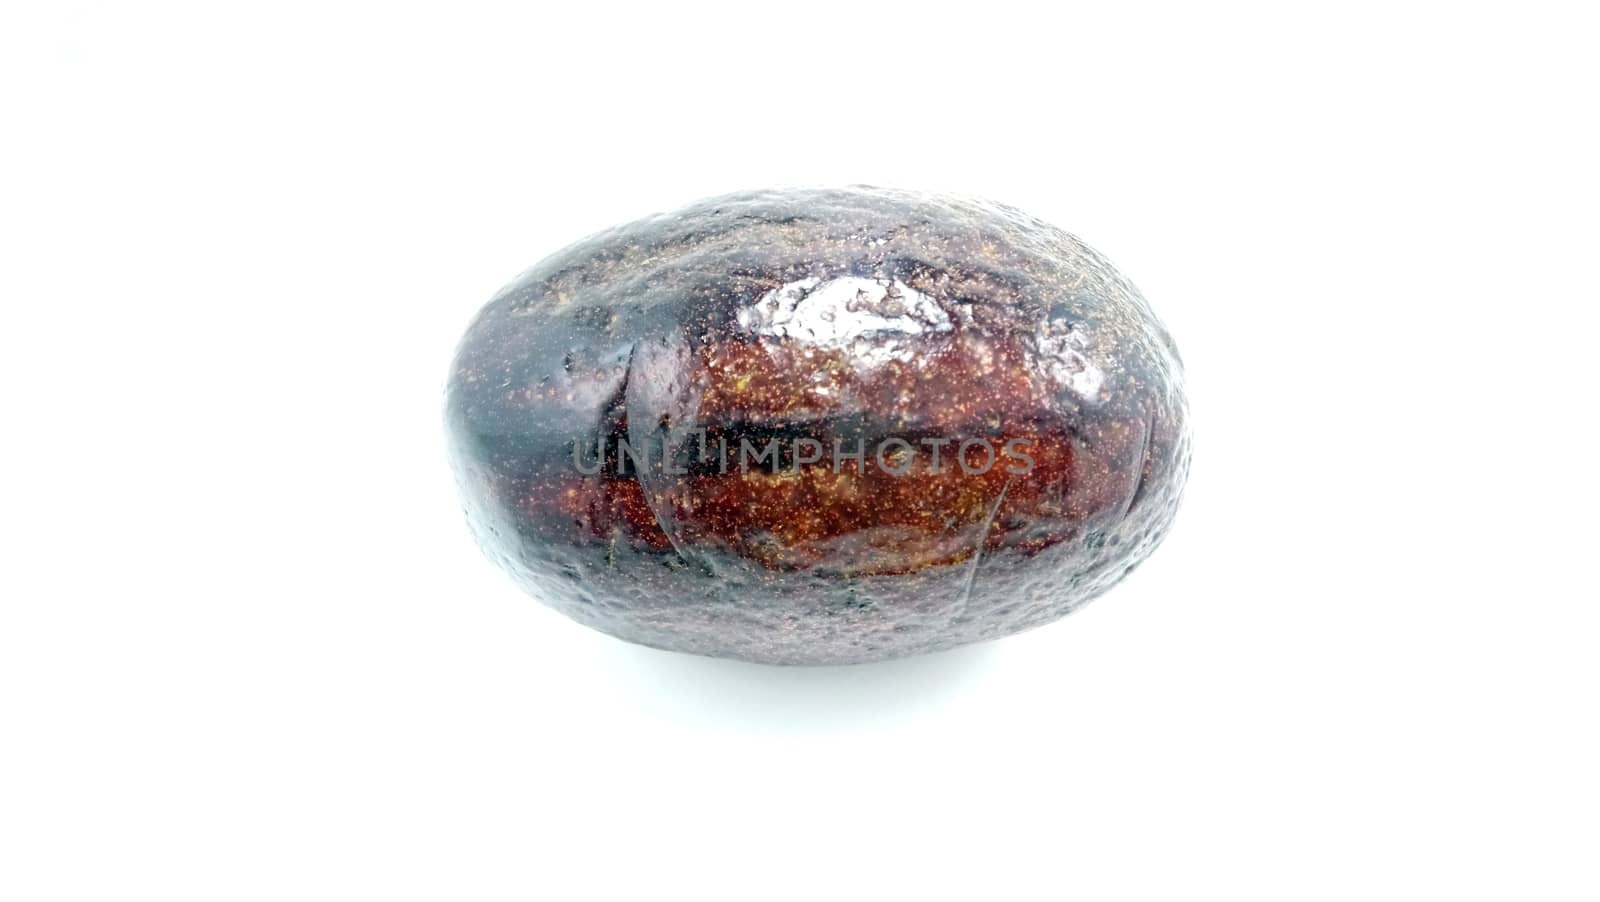 Brown ripe avocado fruit by imwaltersy